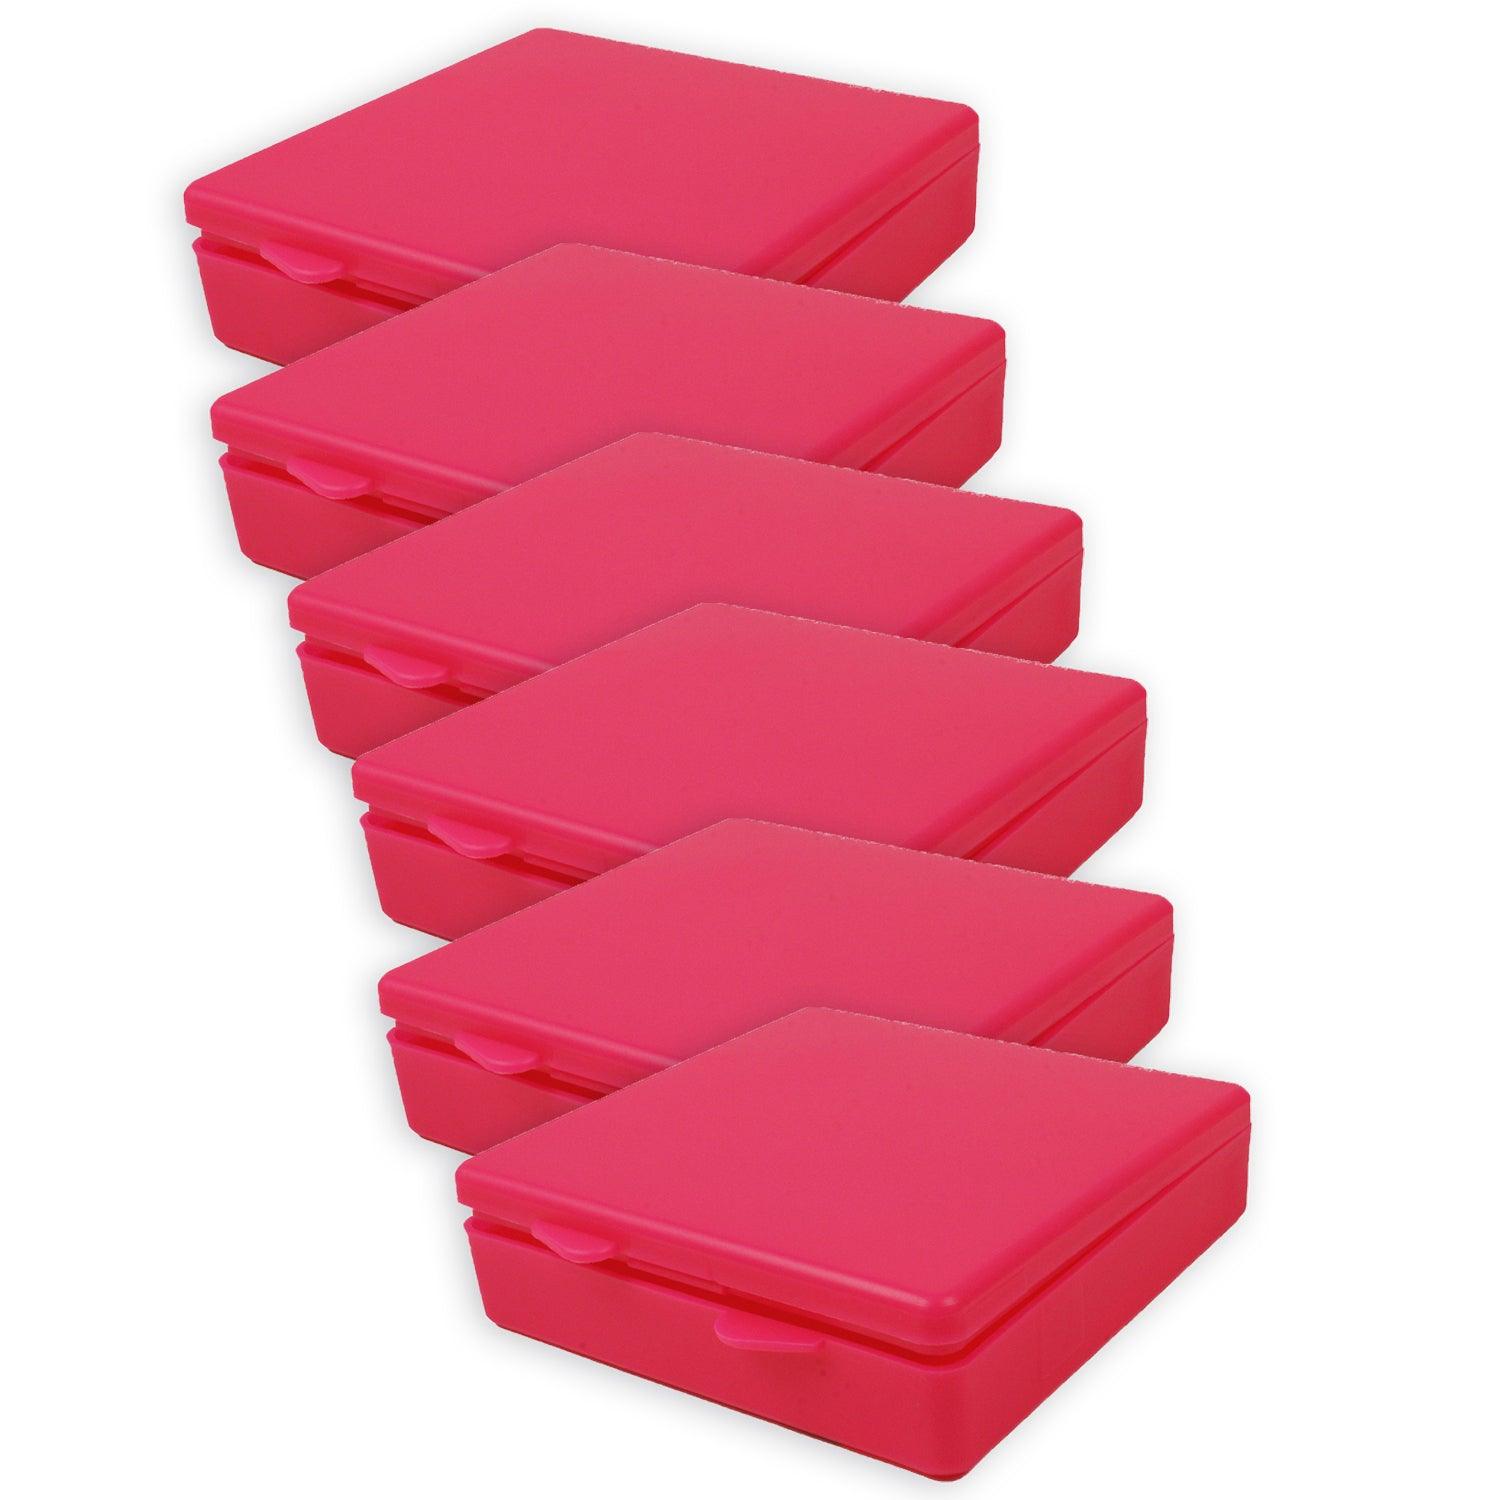 Micro Box, Hot Pink, Pack of 6 - Loomini